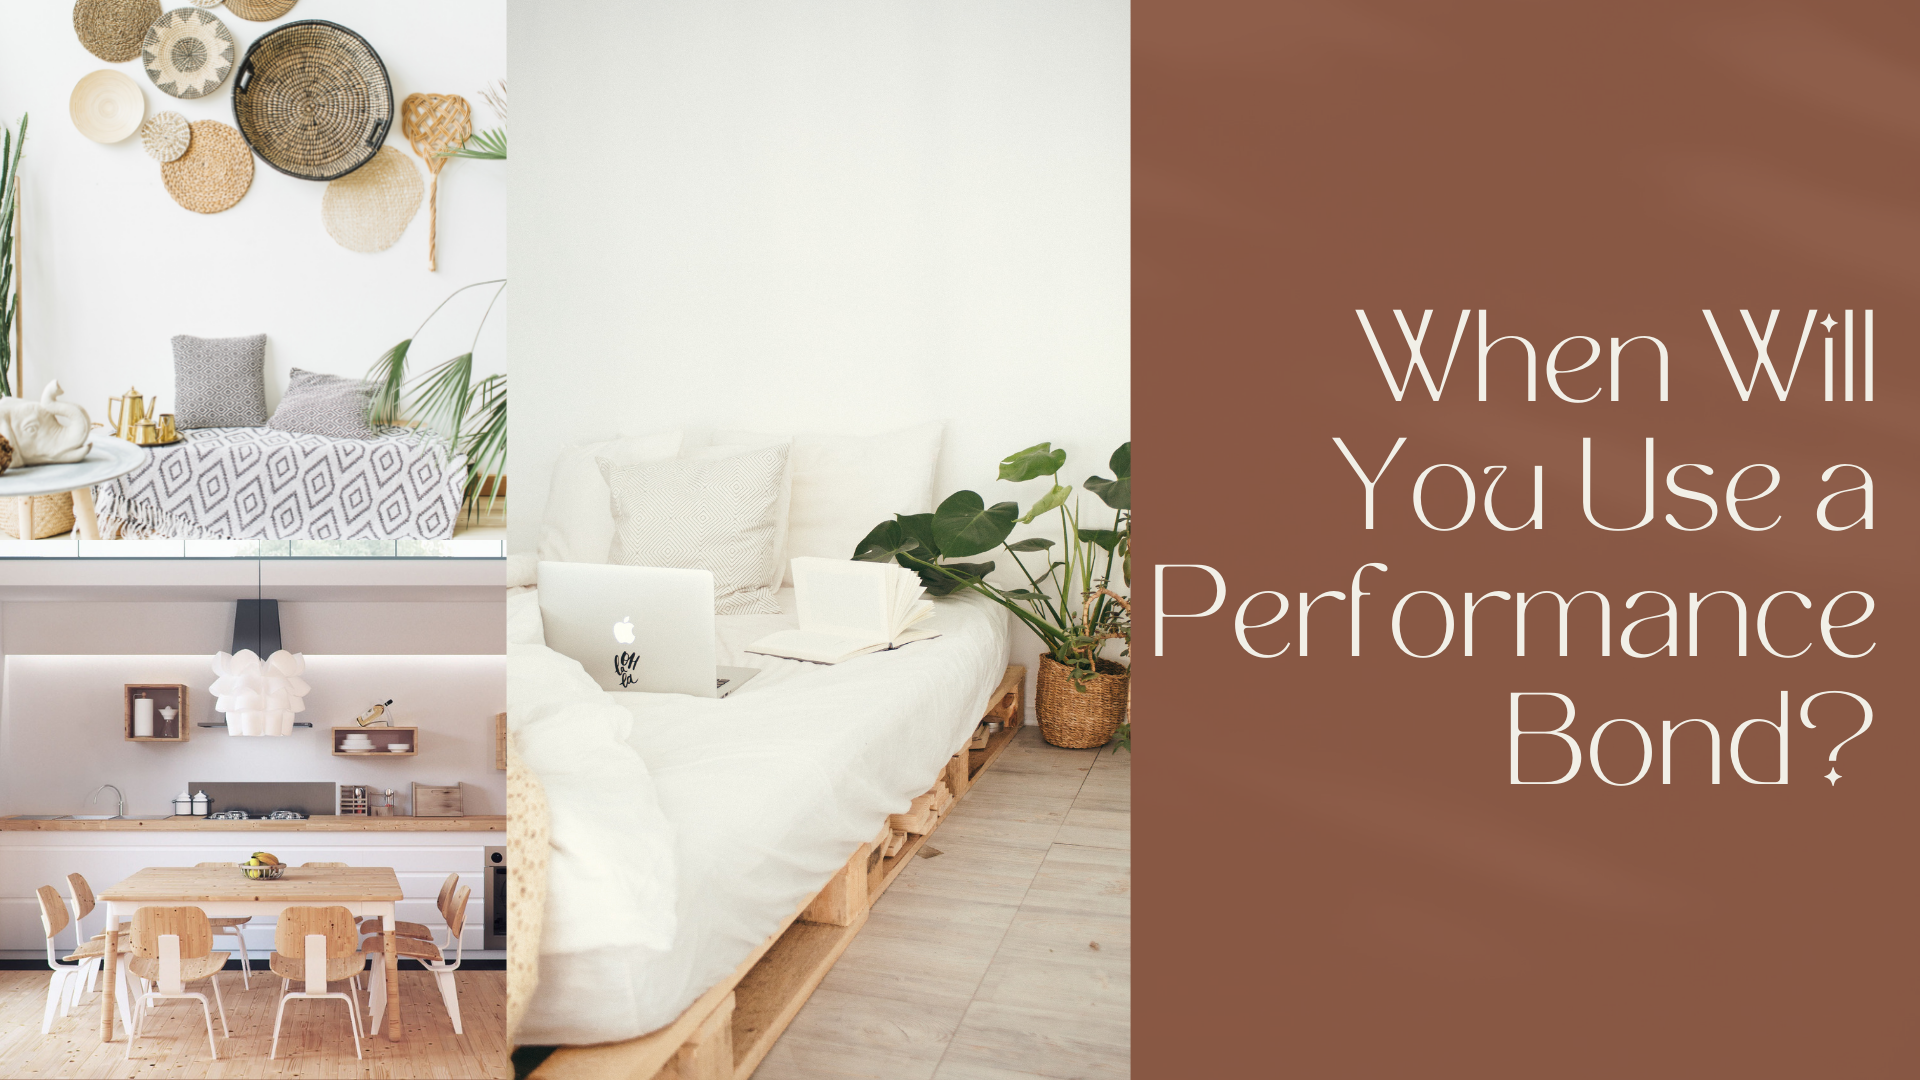 performance bond - When is a performance bond used - minimalist home